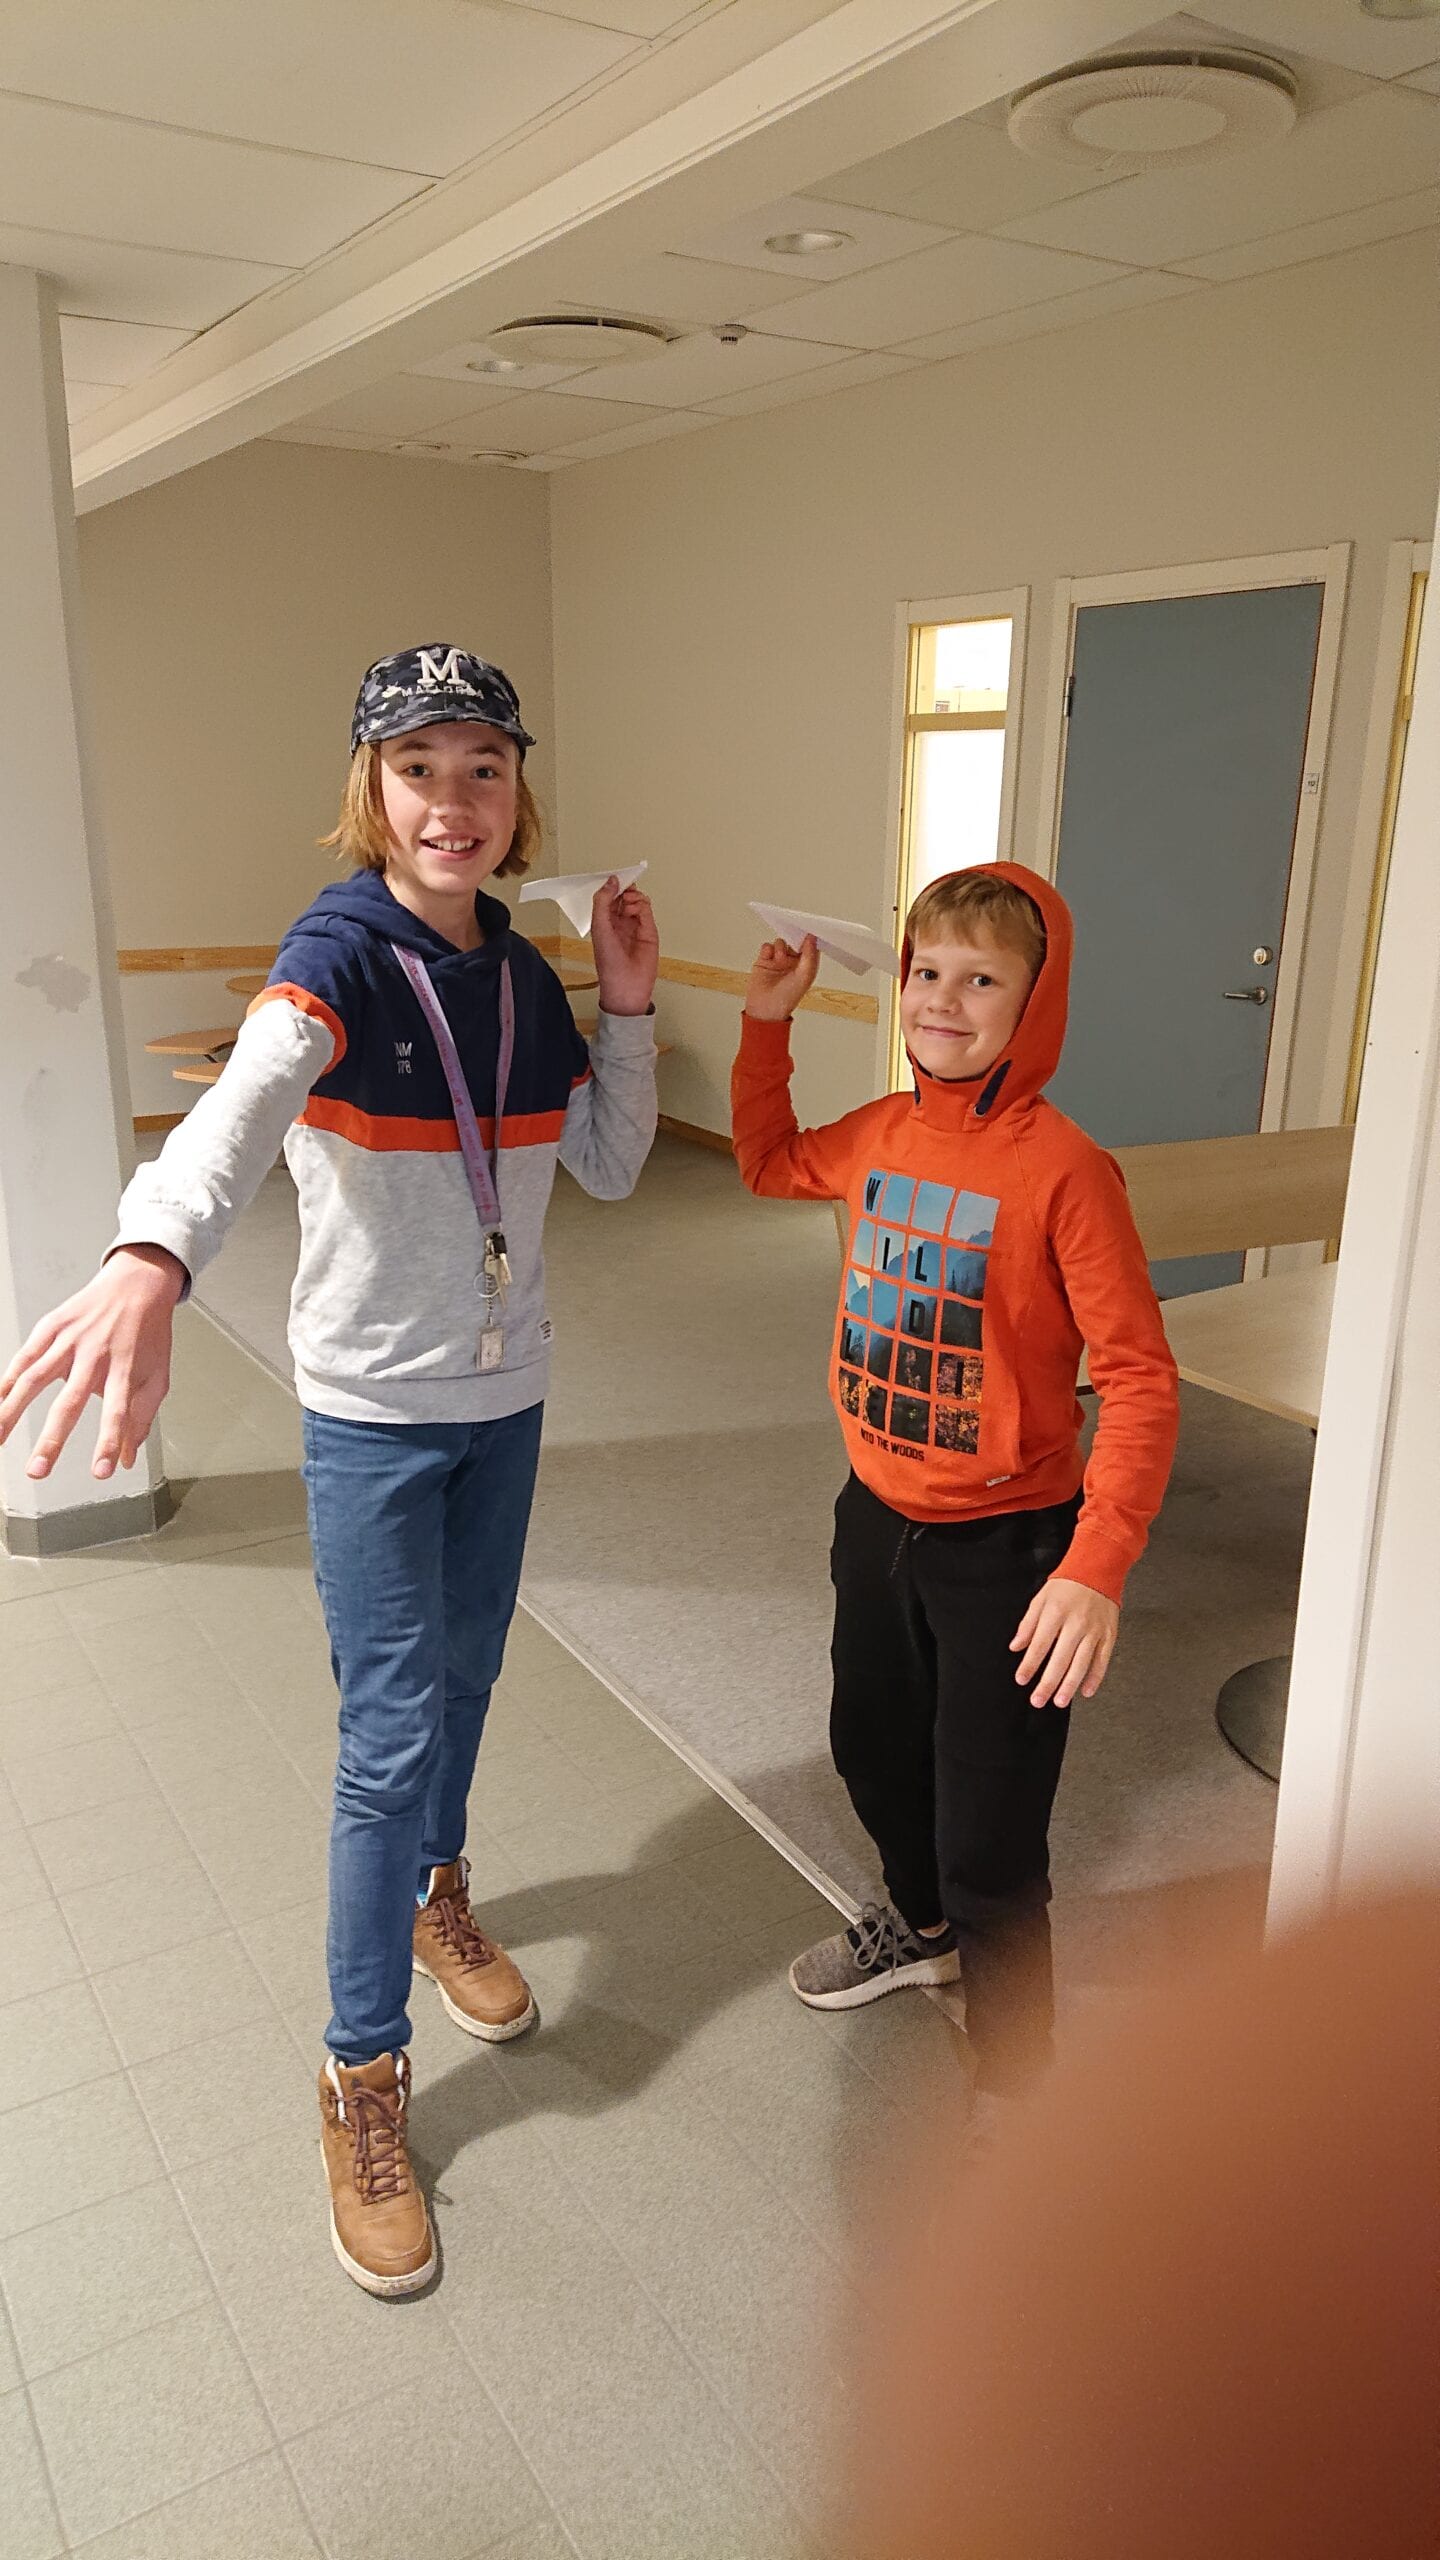 9:e klassare i Skellefteå fick testa på ingenjörsyrket